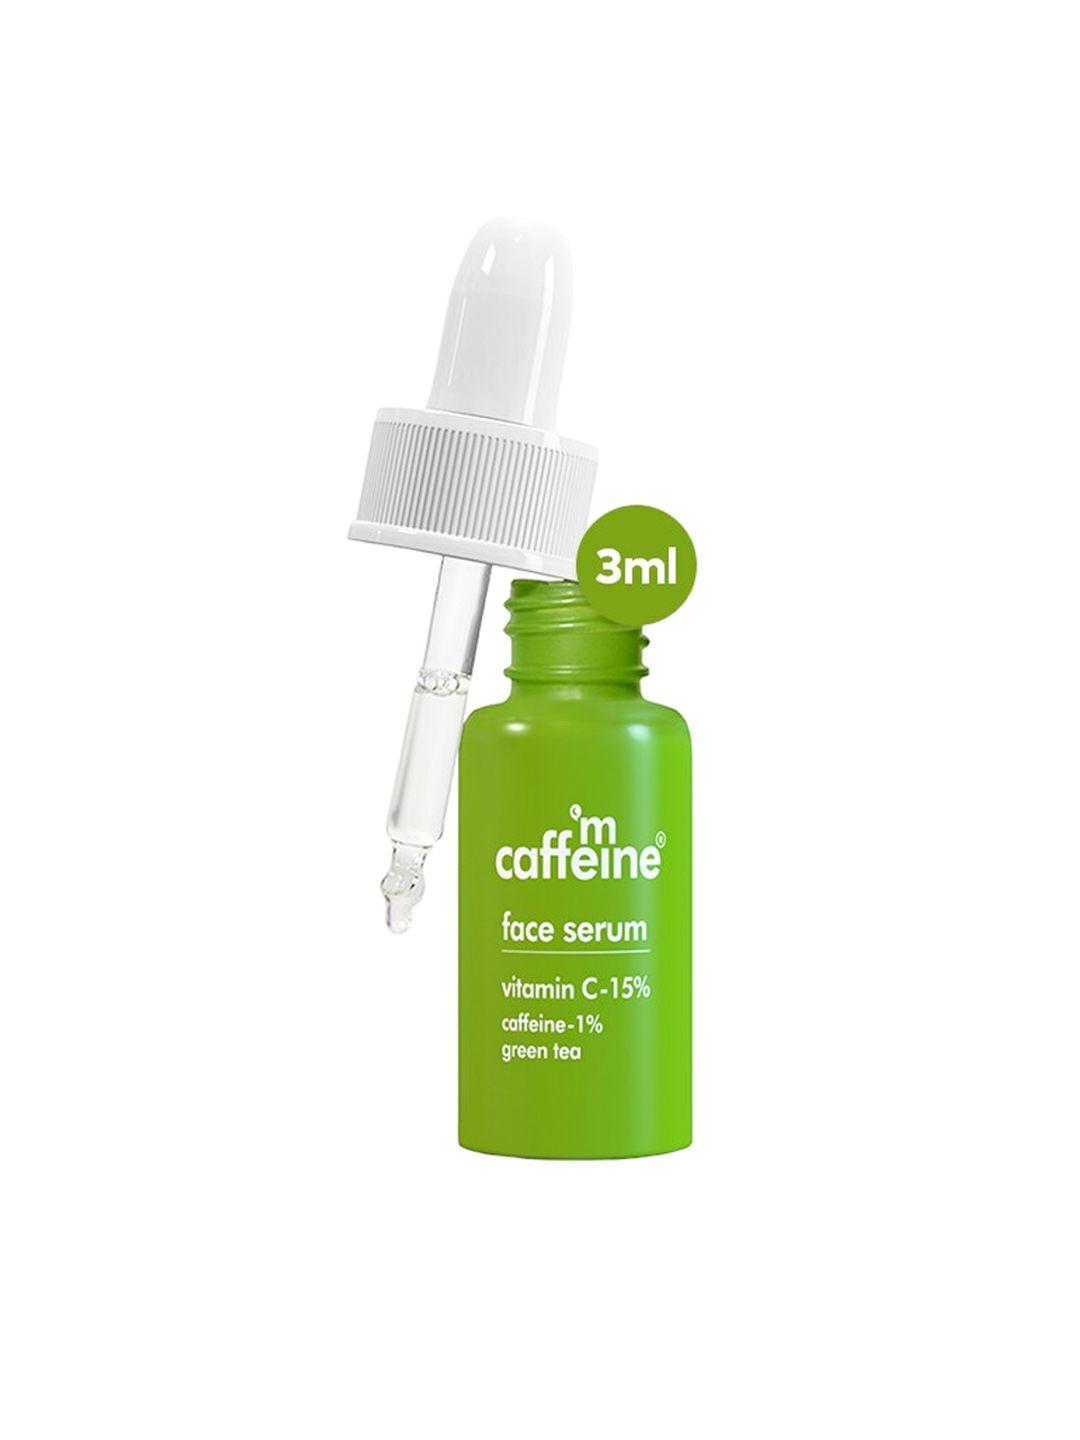 mcaffeine green tea + vitamin c serum 3ml